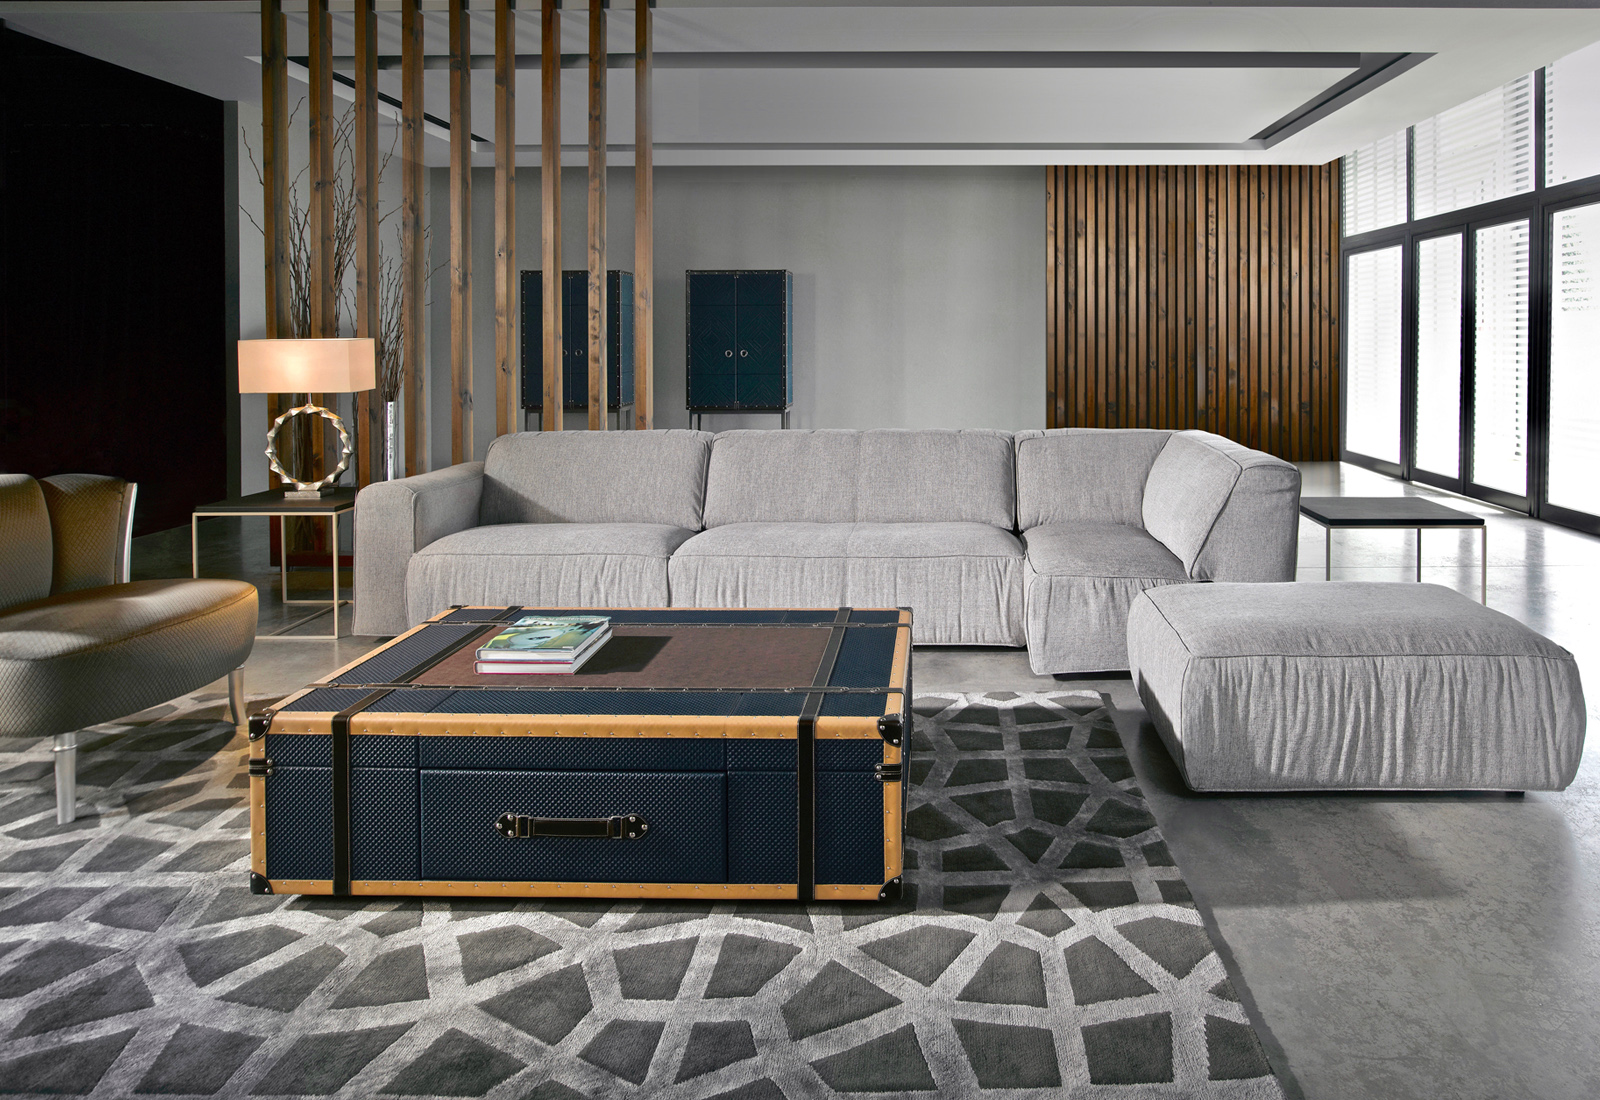 Contempory living room furniture, comfy luxury sofa